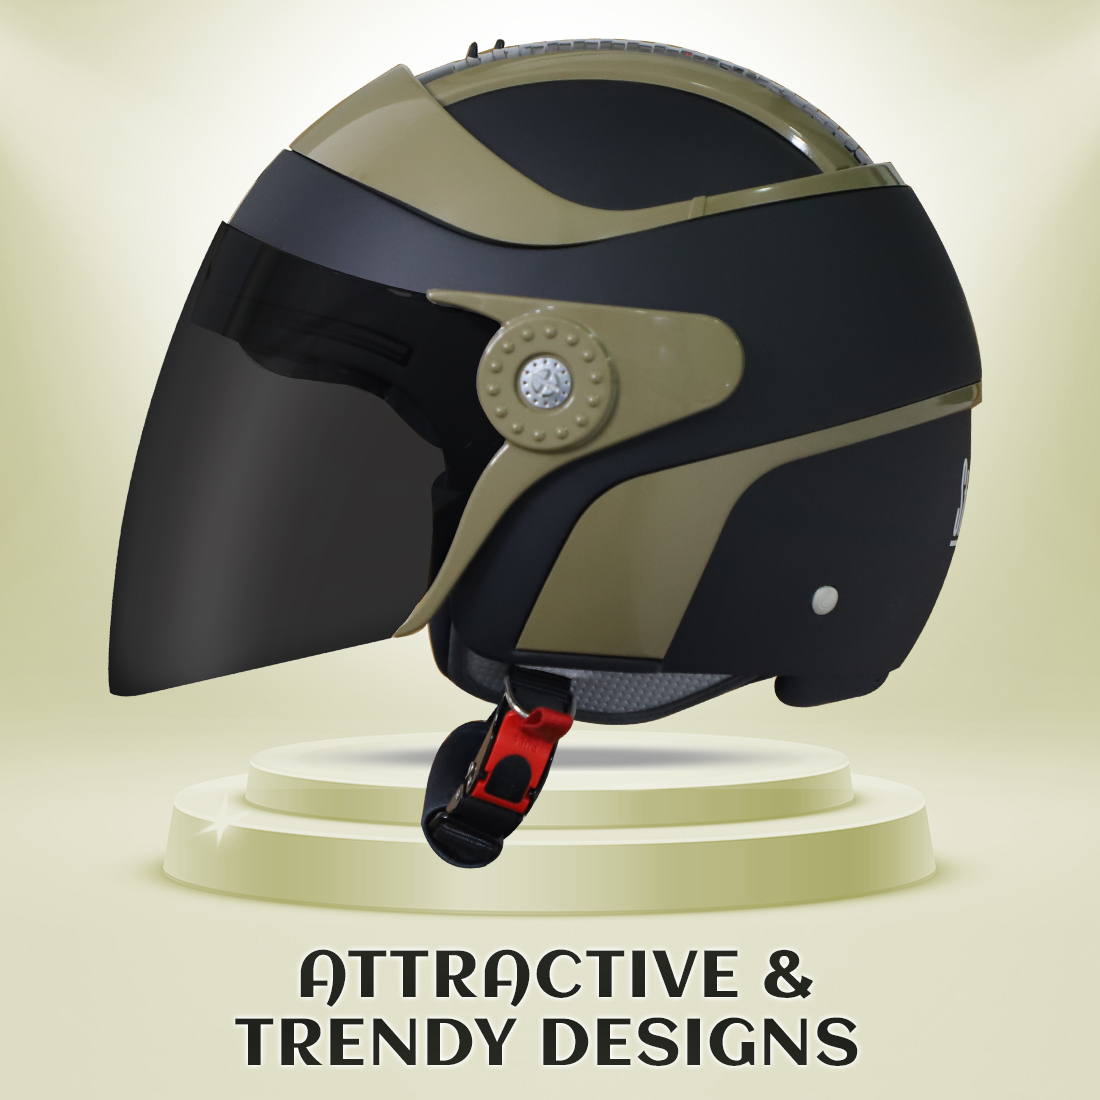 Steelbird SB-29 AER ISI Certified Open Face Helmet For Men And Women (Matt Black Desert Storm With Clear Visor)